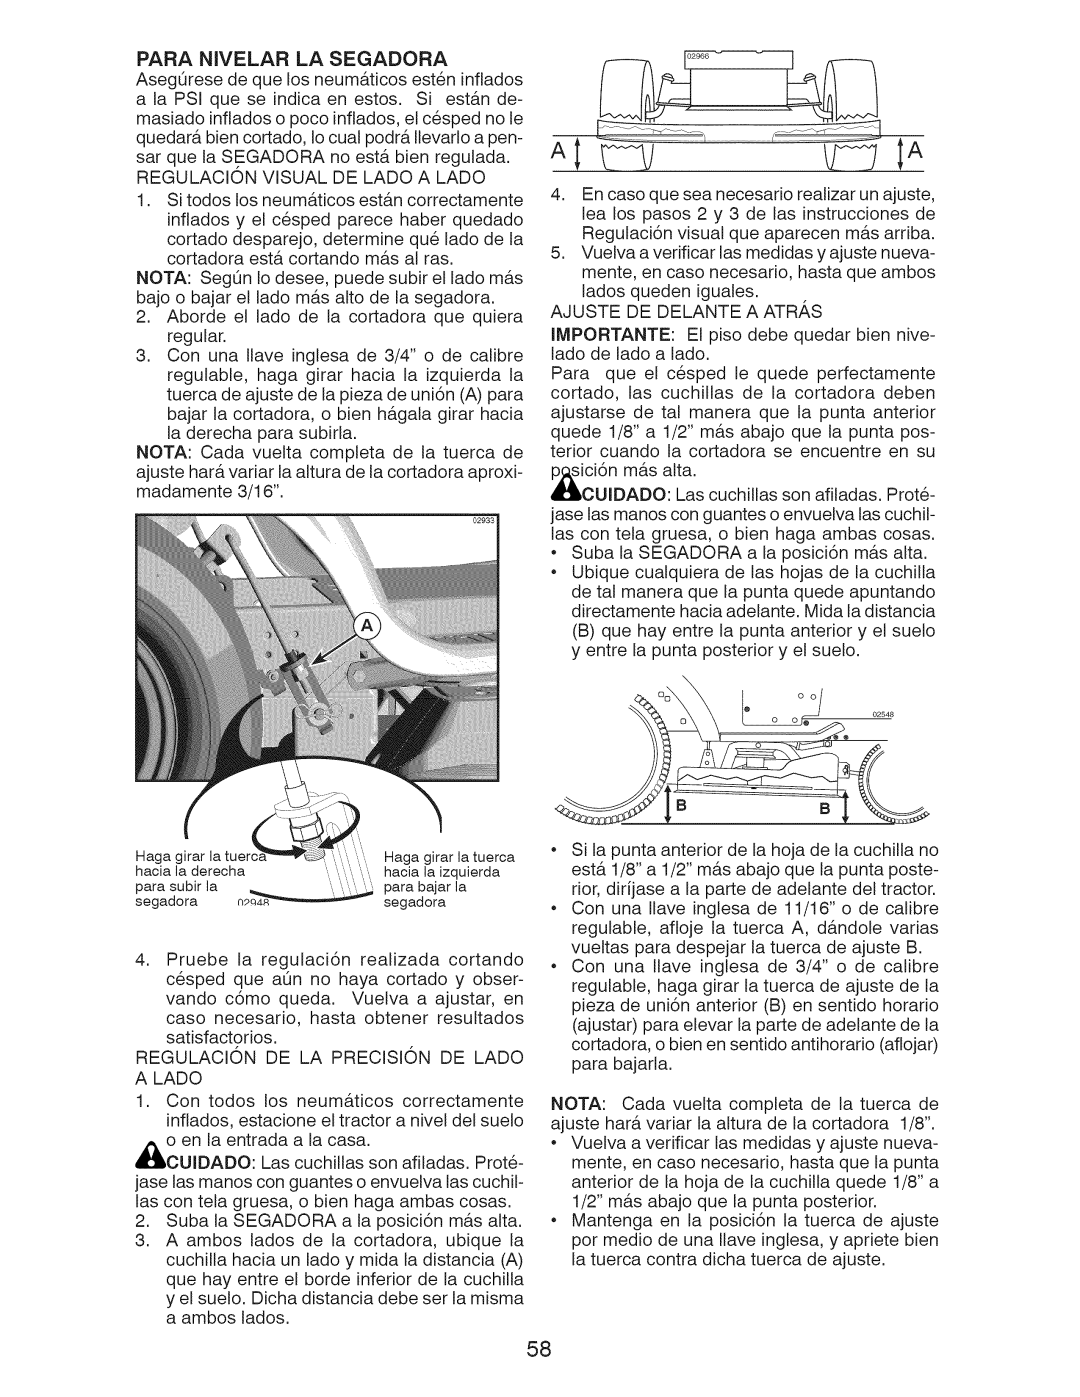 Craftsman 917.28955 owner manual Para Nivelar La Segadora 